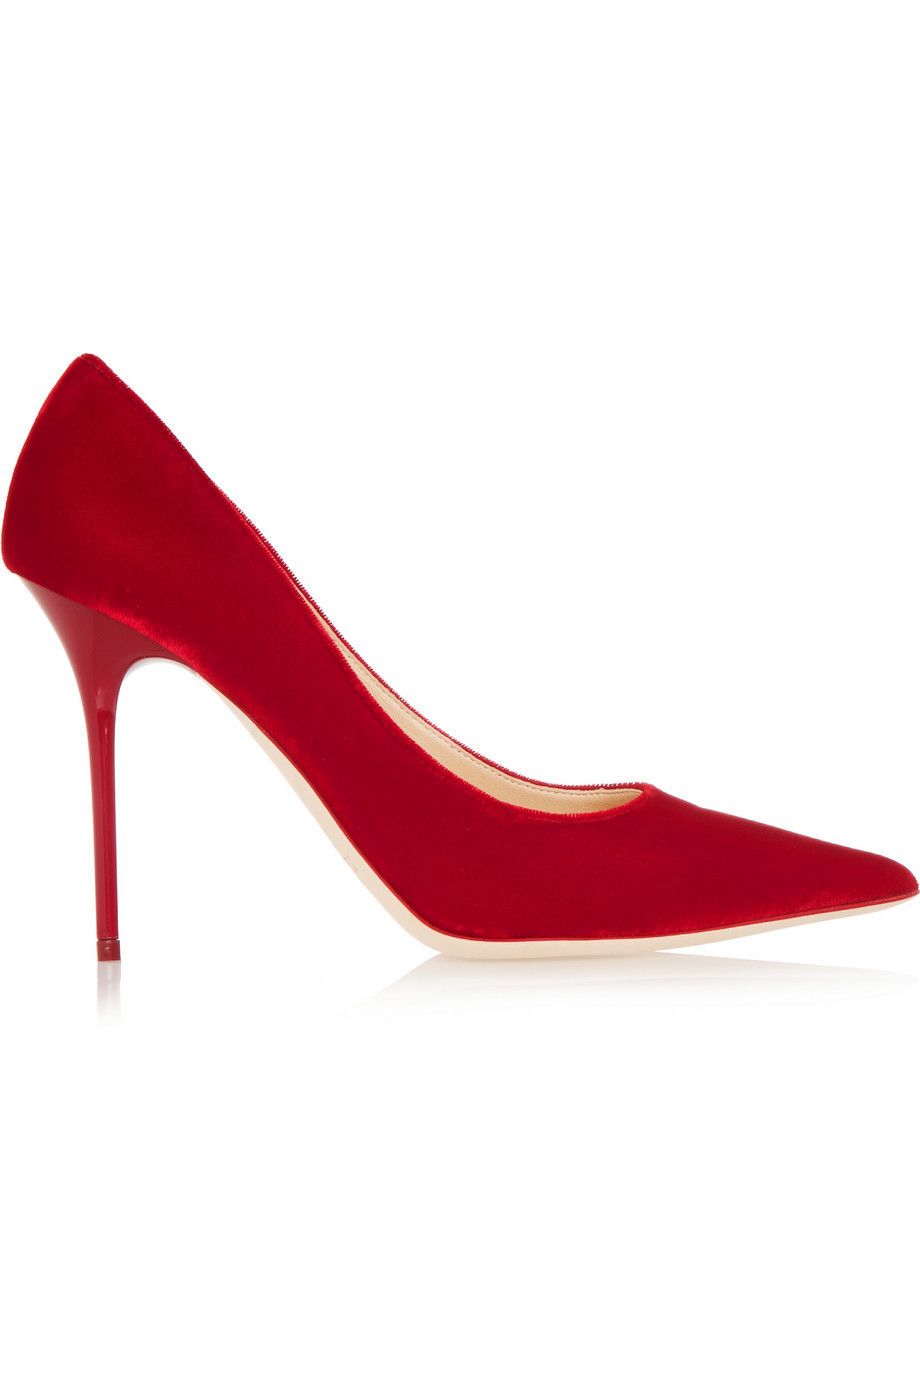 Red, Basic pump, High heels, Carmine, Maroon, Court shoe, Tan, Sandal, Foot, Bridal shoe, 